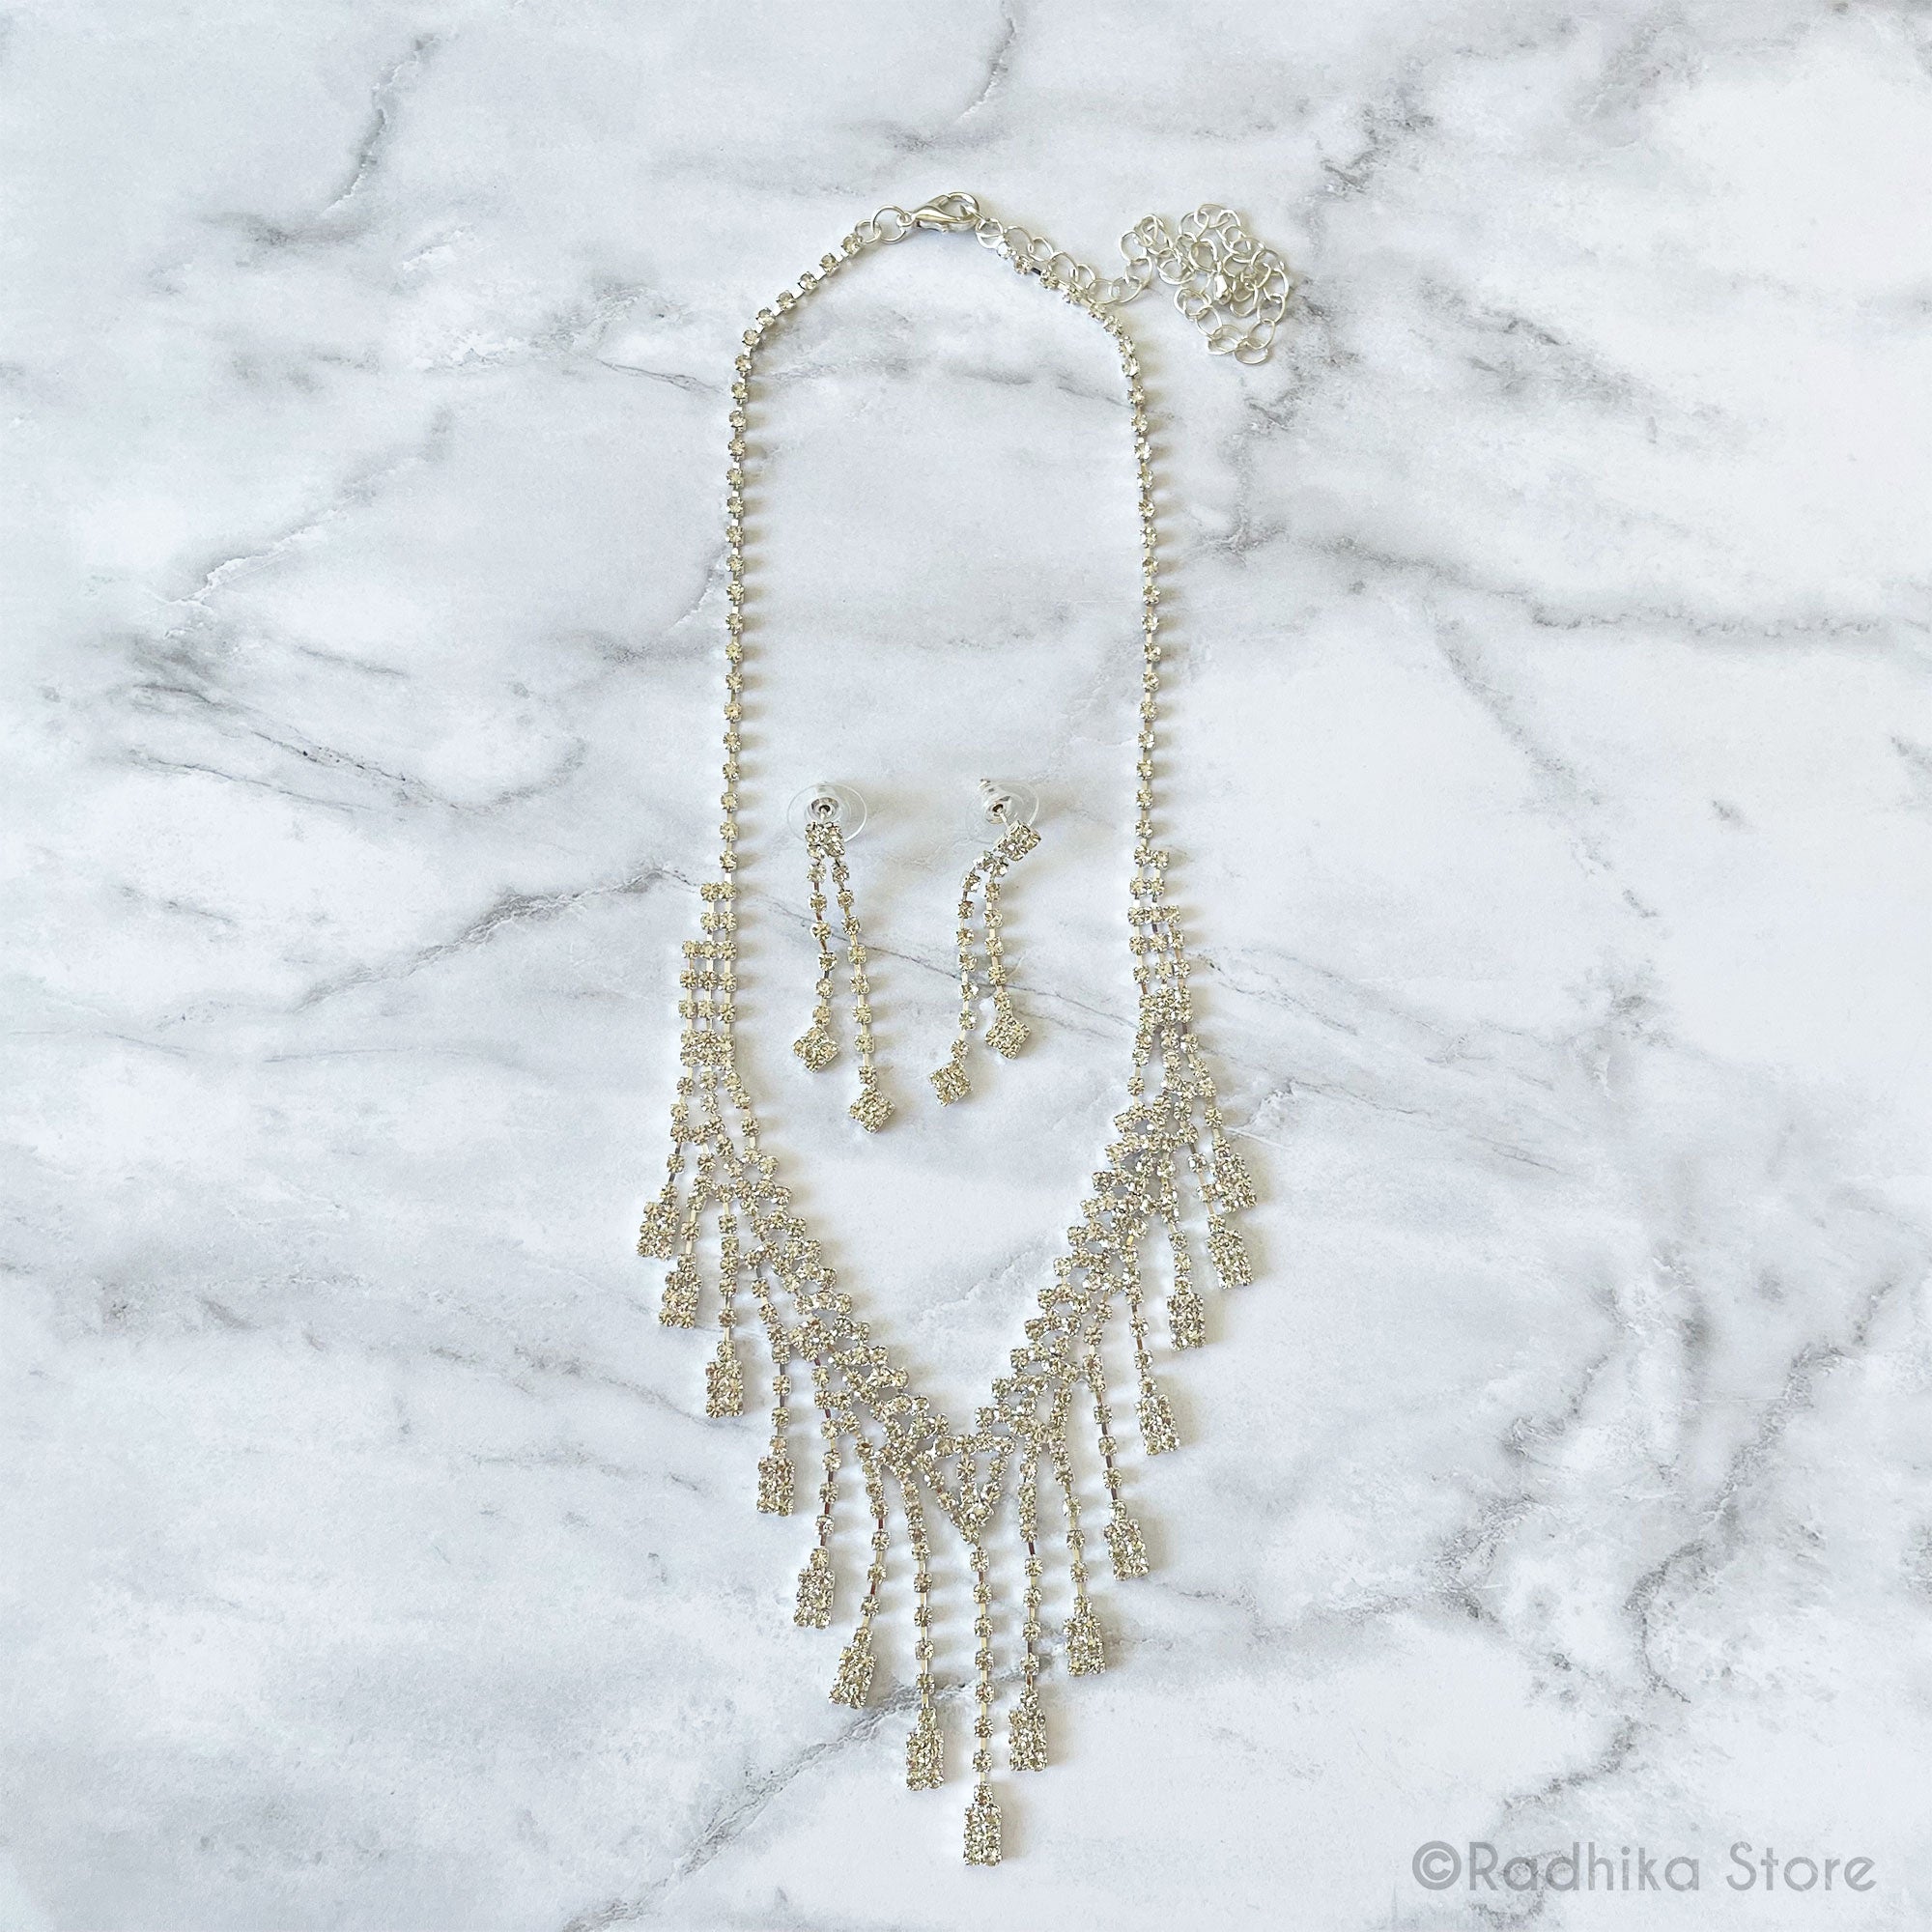 Dangling Diamonds- Rhinestone Deity Necklace And Earring Set